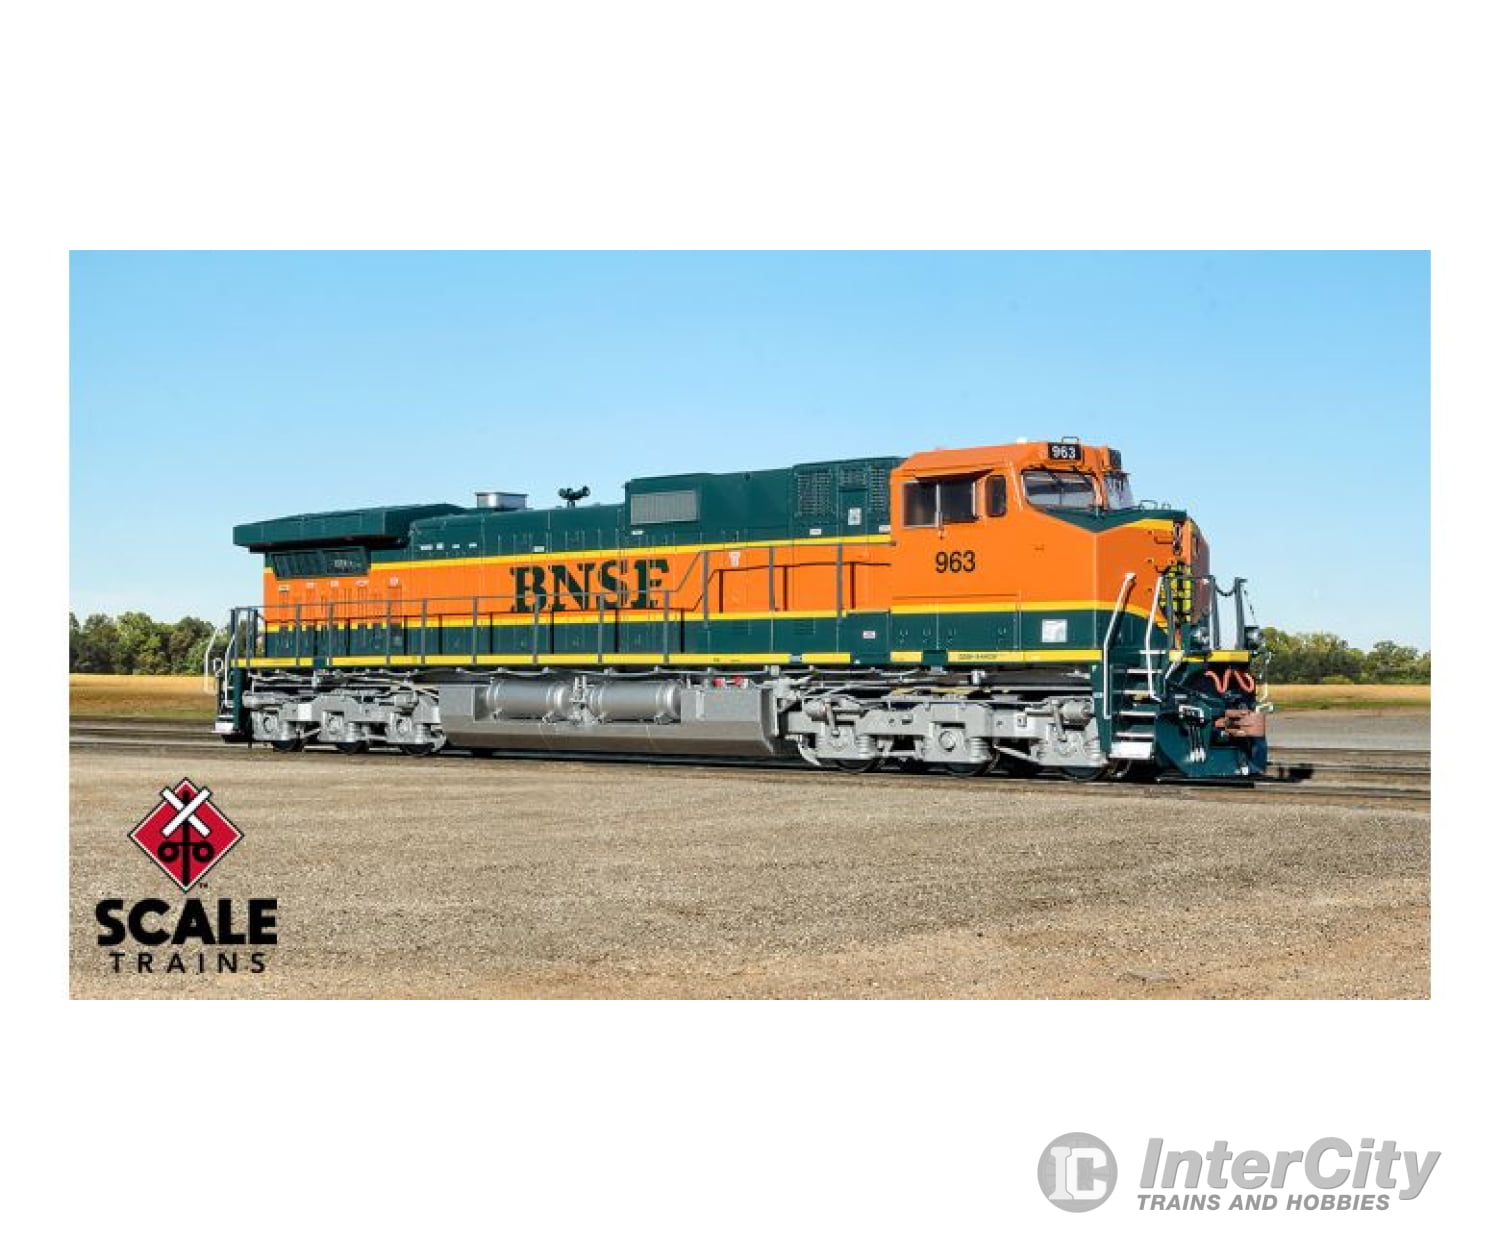 Scale Trains Sxt33440 Rivet Counter Ho Ge Dash-9 Bnsf/Heritage I Dcc & Sound Rd# 963 Locomotives